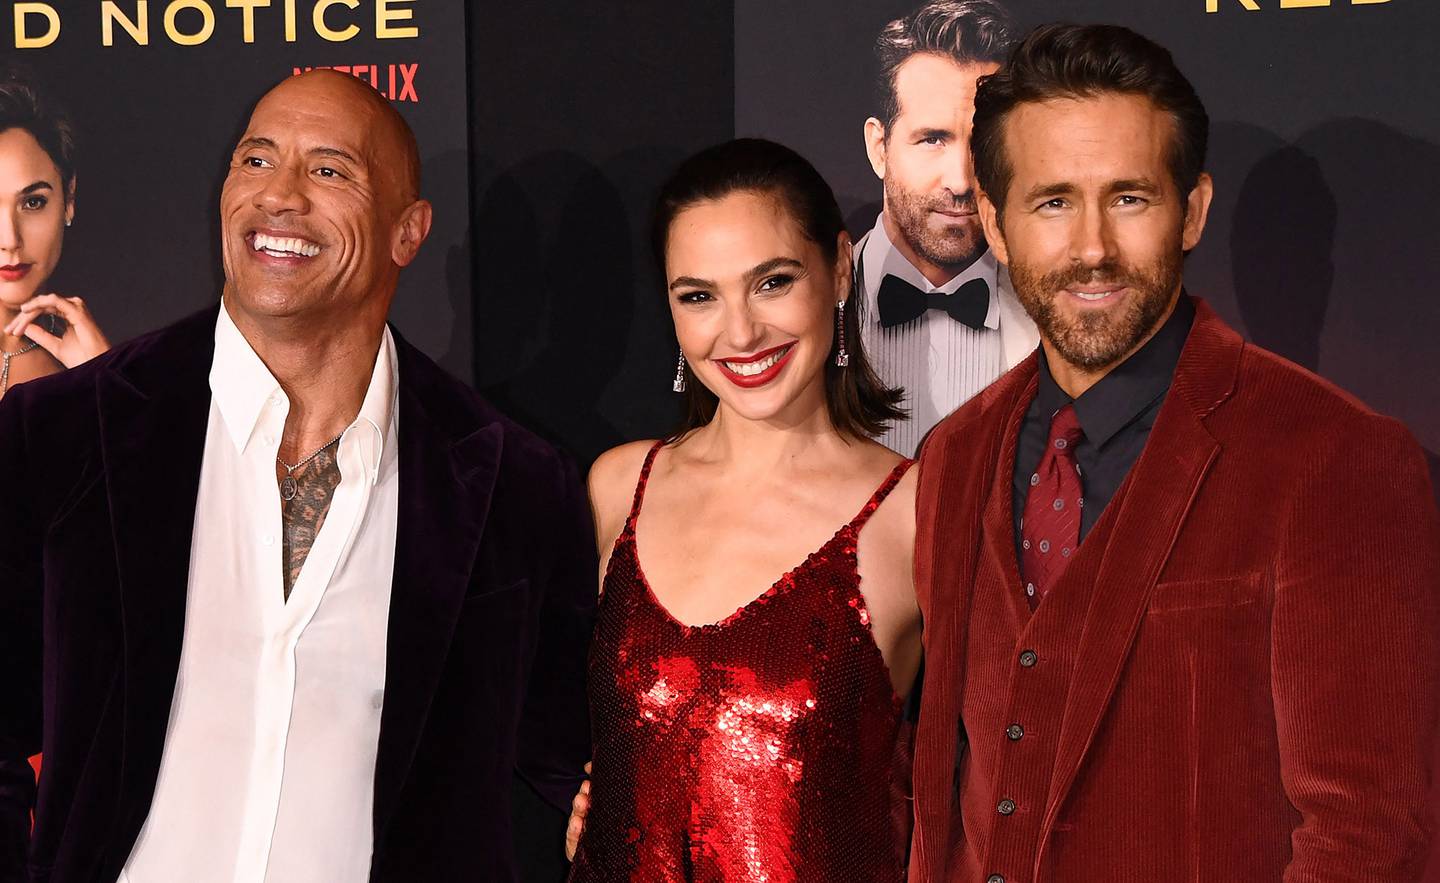 Dwayne Johnson, Gal Gadot y Ryan Reynolds asisten al estreno mundial de “Alerta roja” de Netflix en Los Ángeles. Fotógrafo: Patrick T. Fallon / AFP / Getty Images